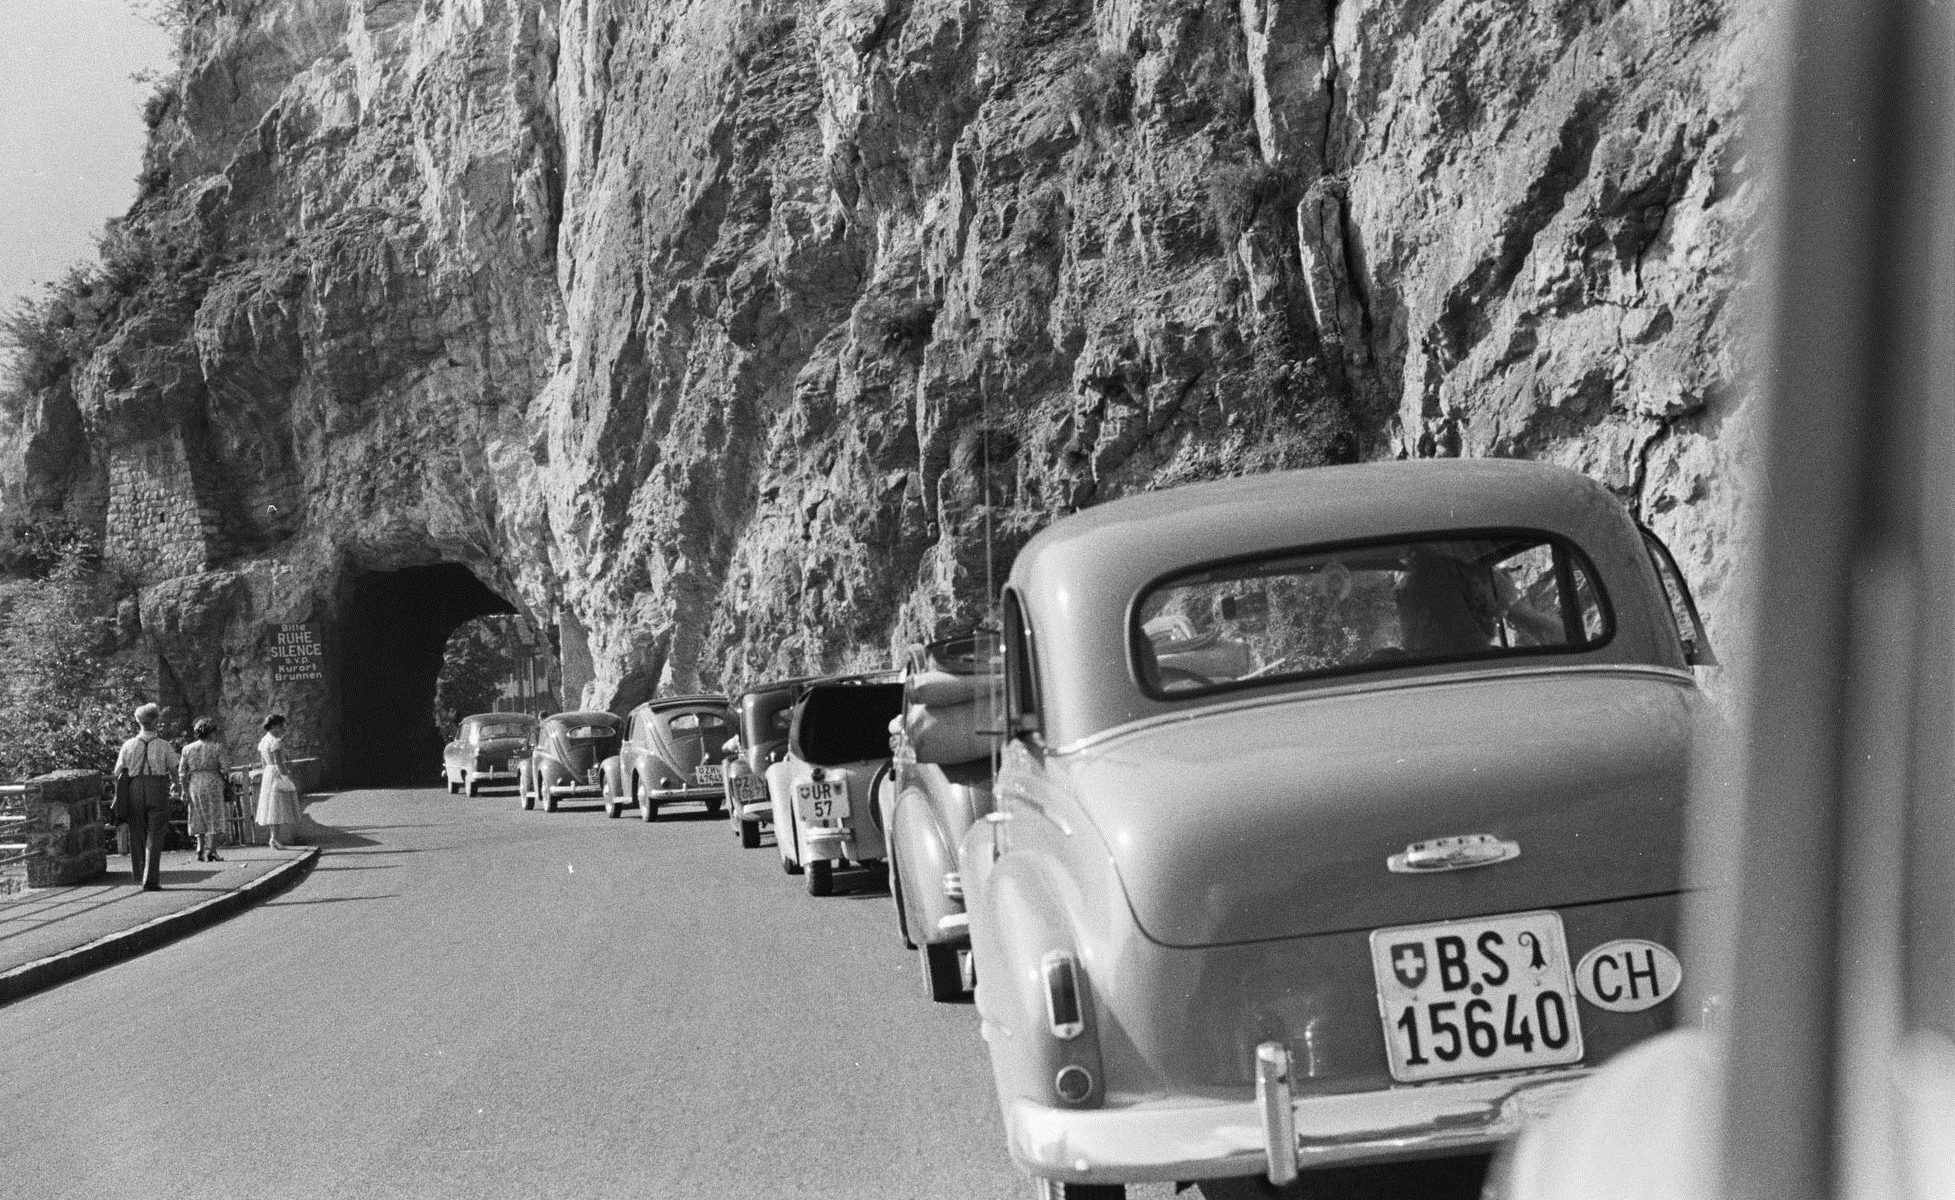 Gothard tunnel traffic - Uri Bilder- GOTTHARD TAILBACKS: Alpine tunnel closure causes major holiday traffic disruption